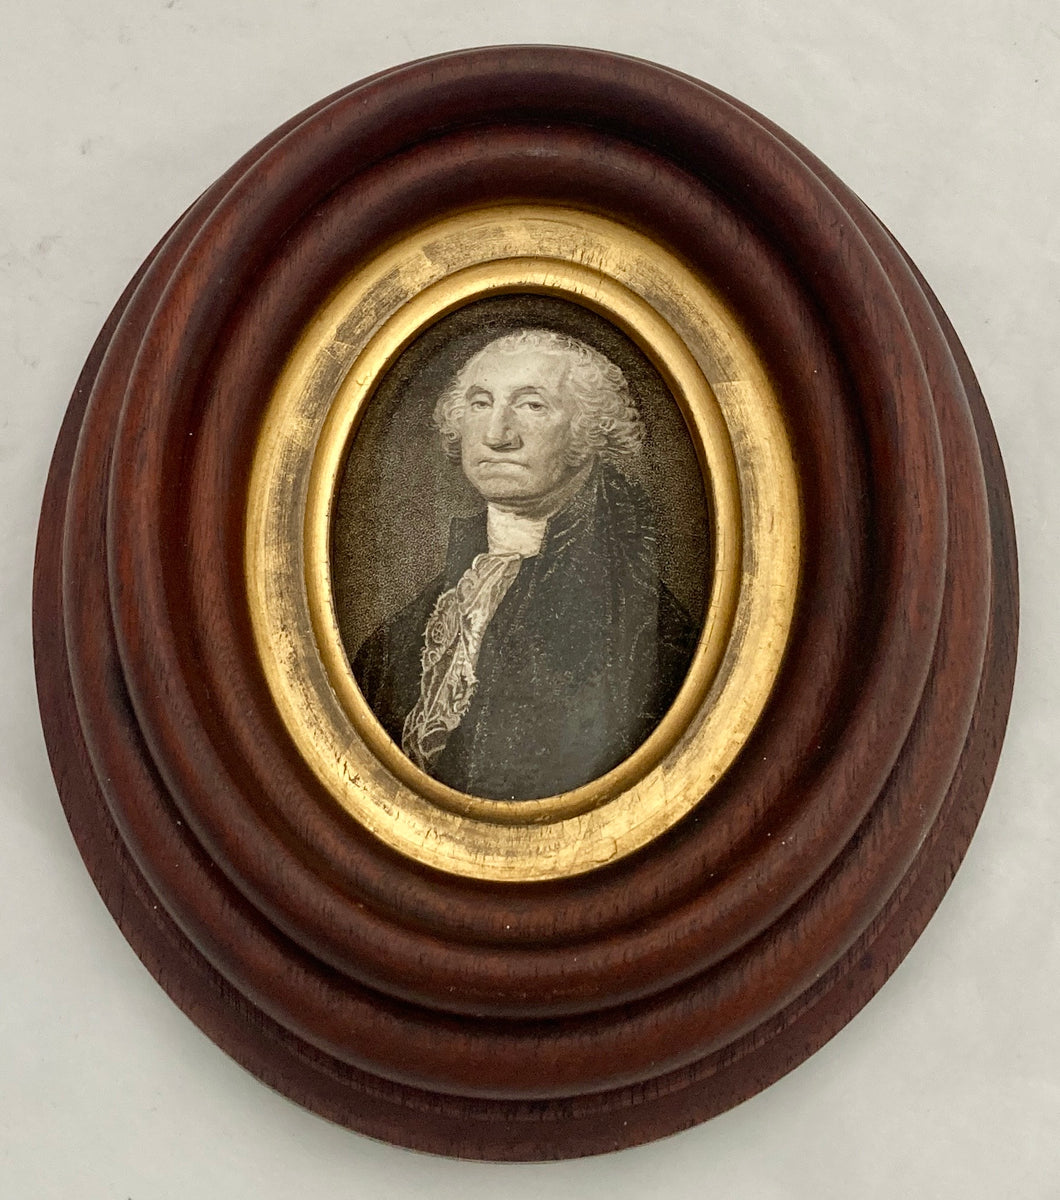 Revolutionary Wars & Declaration of Independence; George Washington Ceramic Plaque